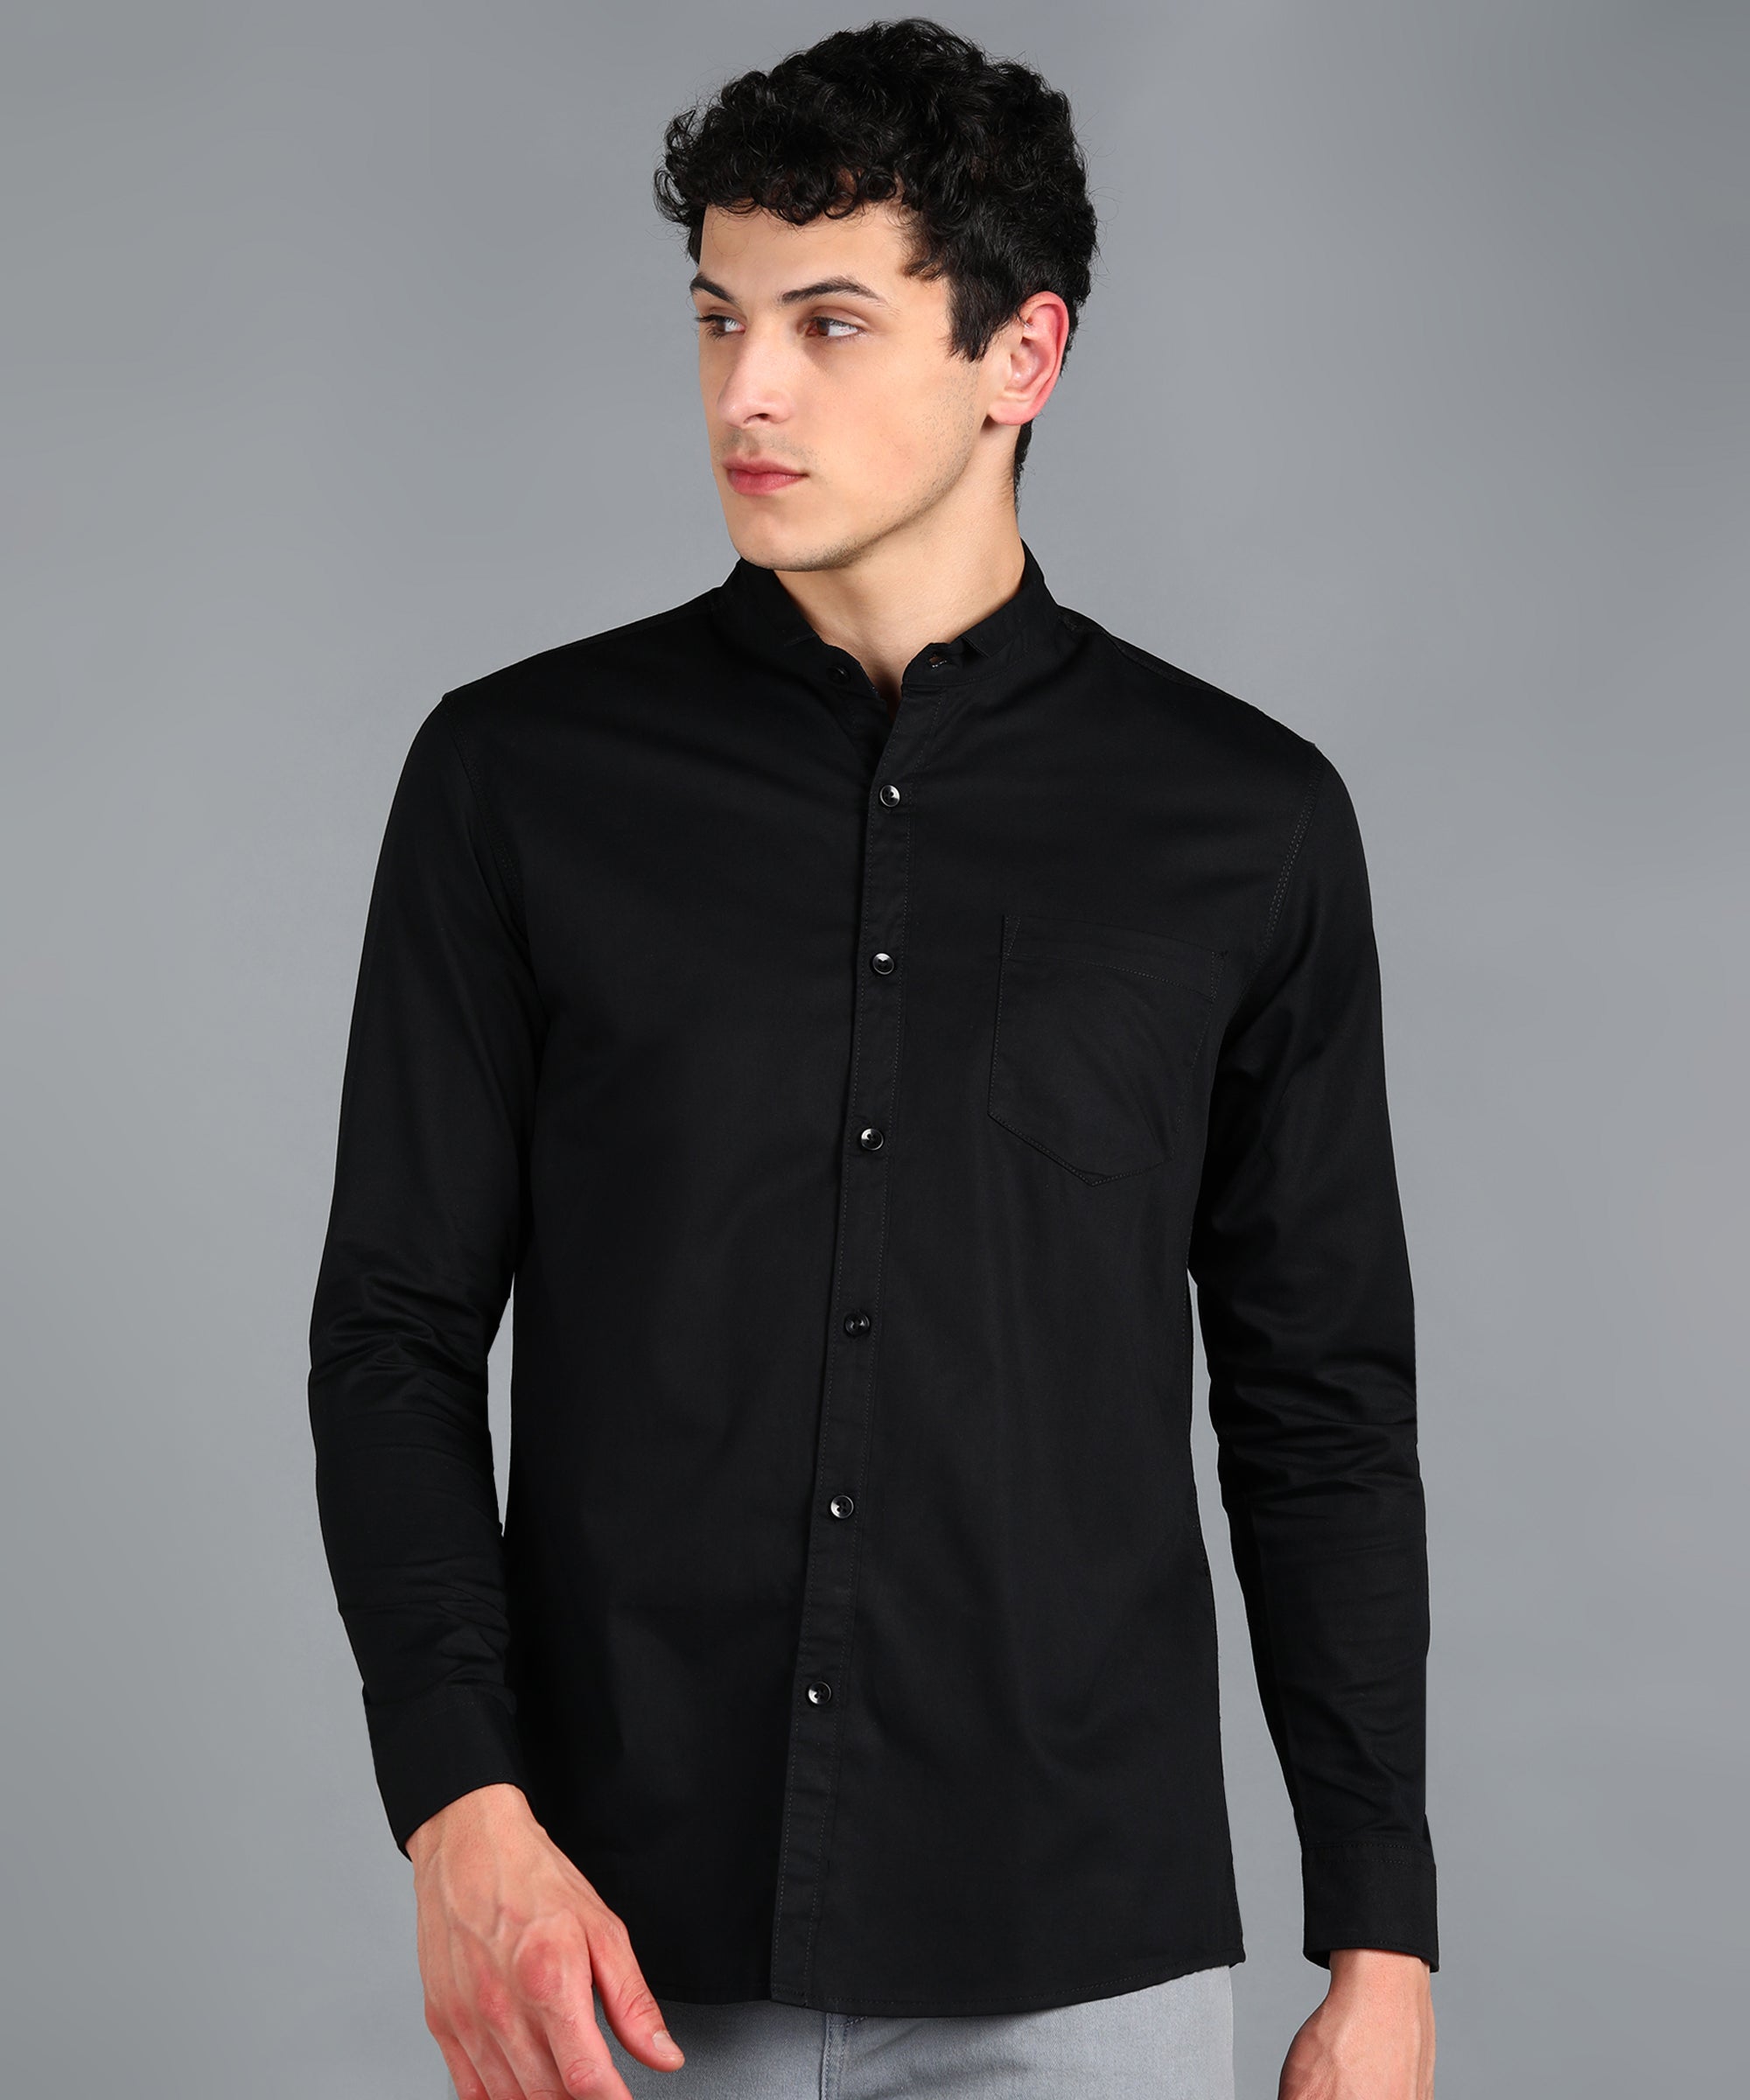 Urbano Fashion Men's Black Cotton Full Sleeve Slim Fit Solid Shirt with Mandarin Collar